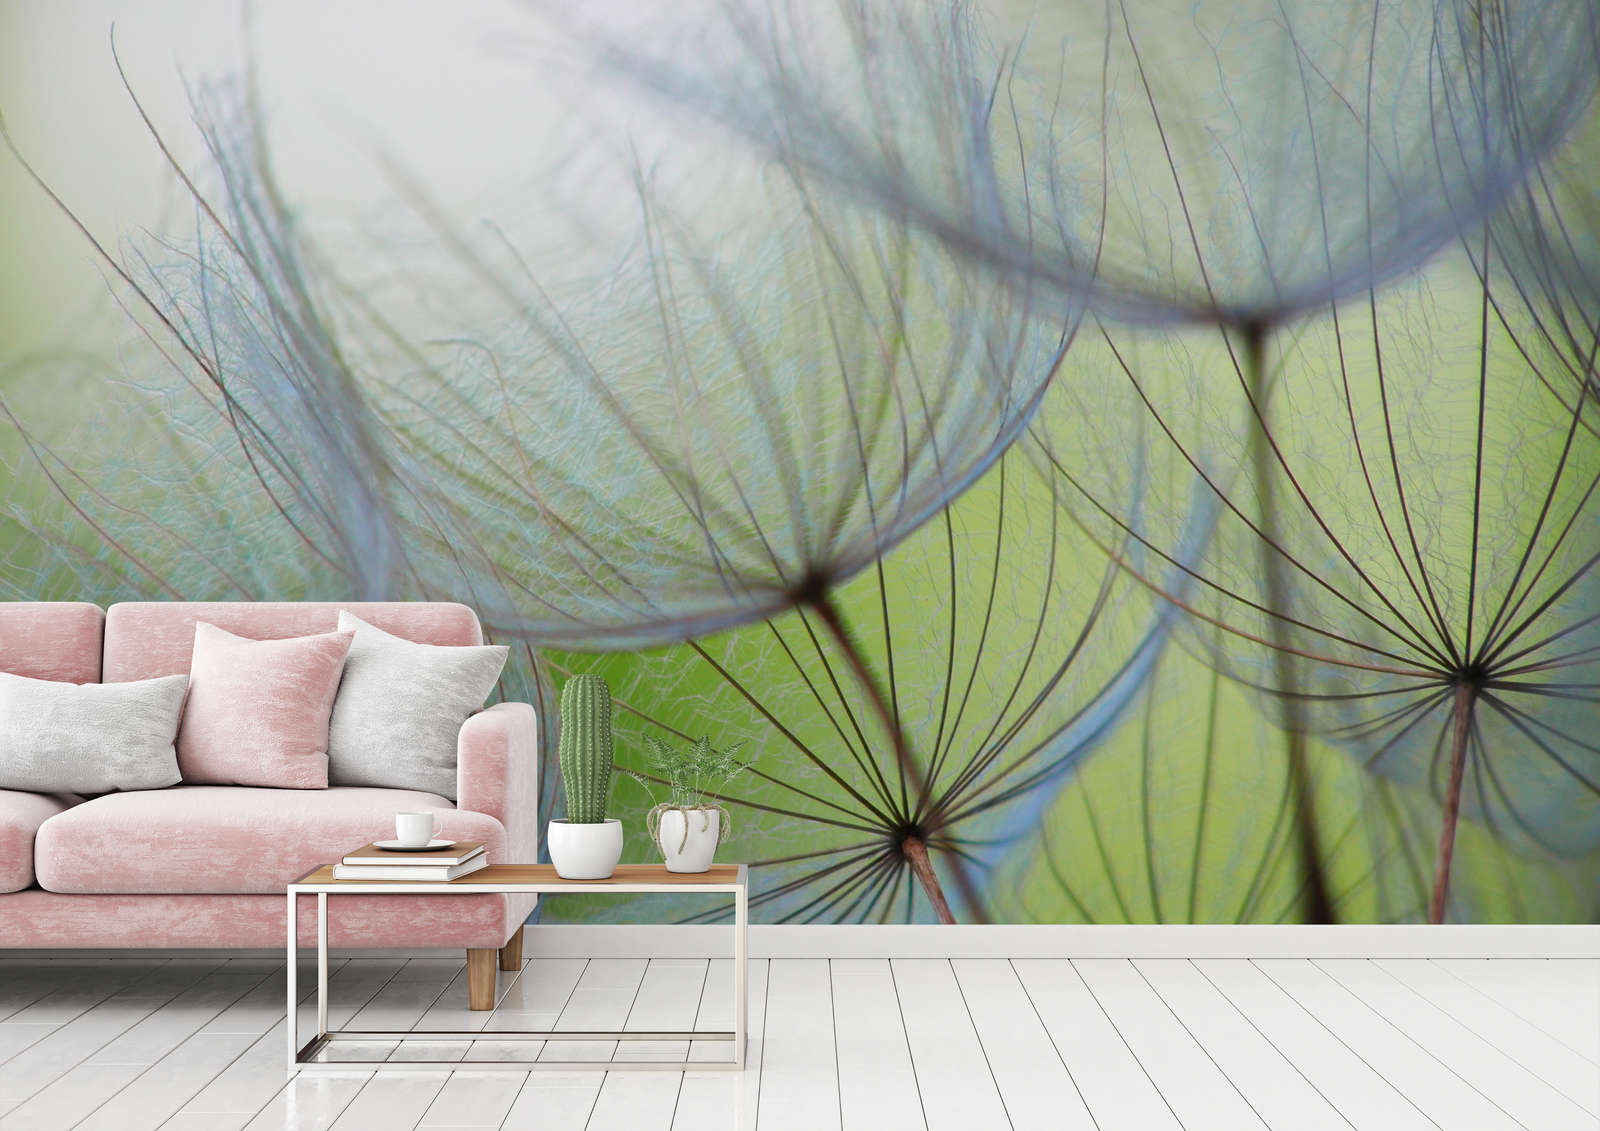             Photo wallpaper detail with dandelions - Premium smooth fleece
        